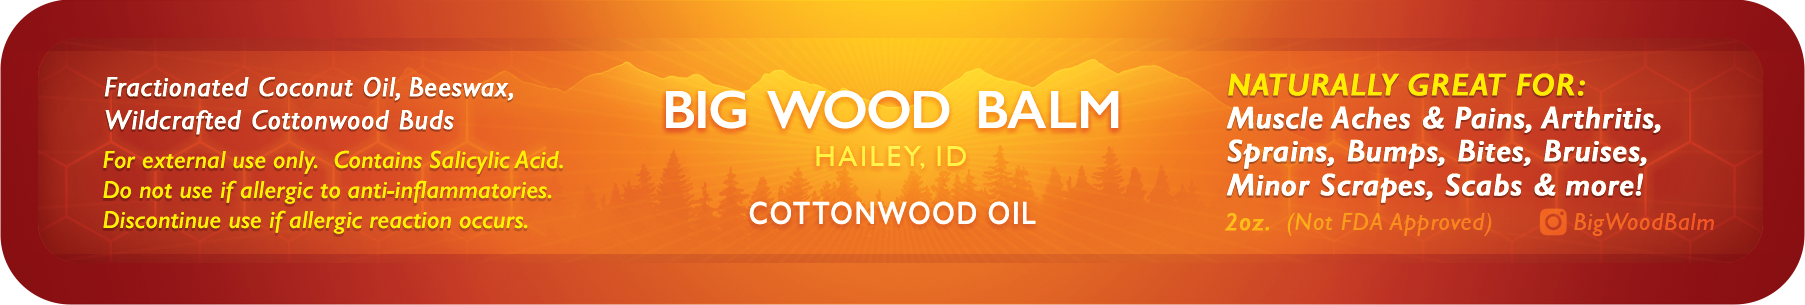 Big Wood Balm - Cottonwood Oil Balm